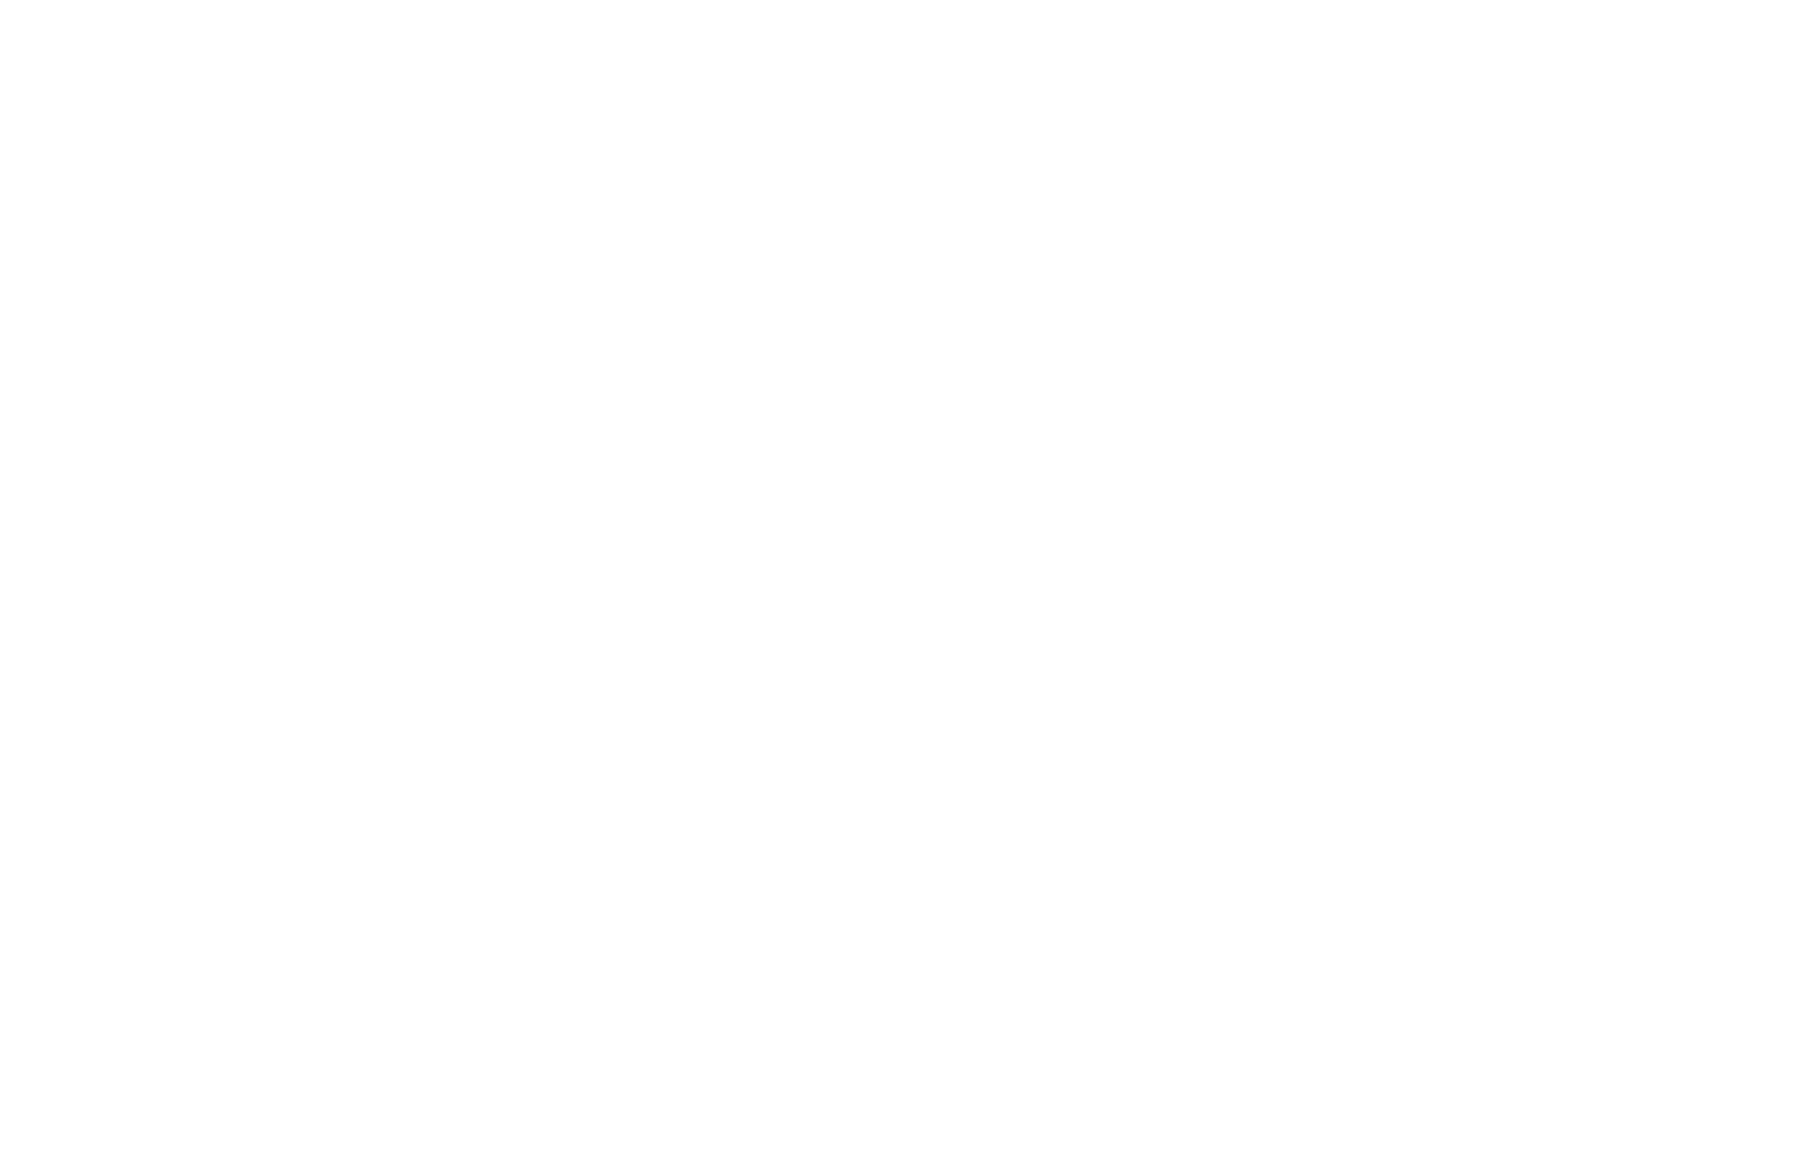 Sukoon Active - Org Chart, Teams, Culture & Jobs | The Org